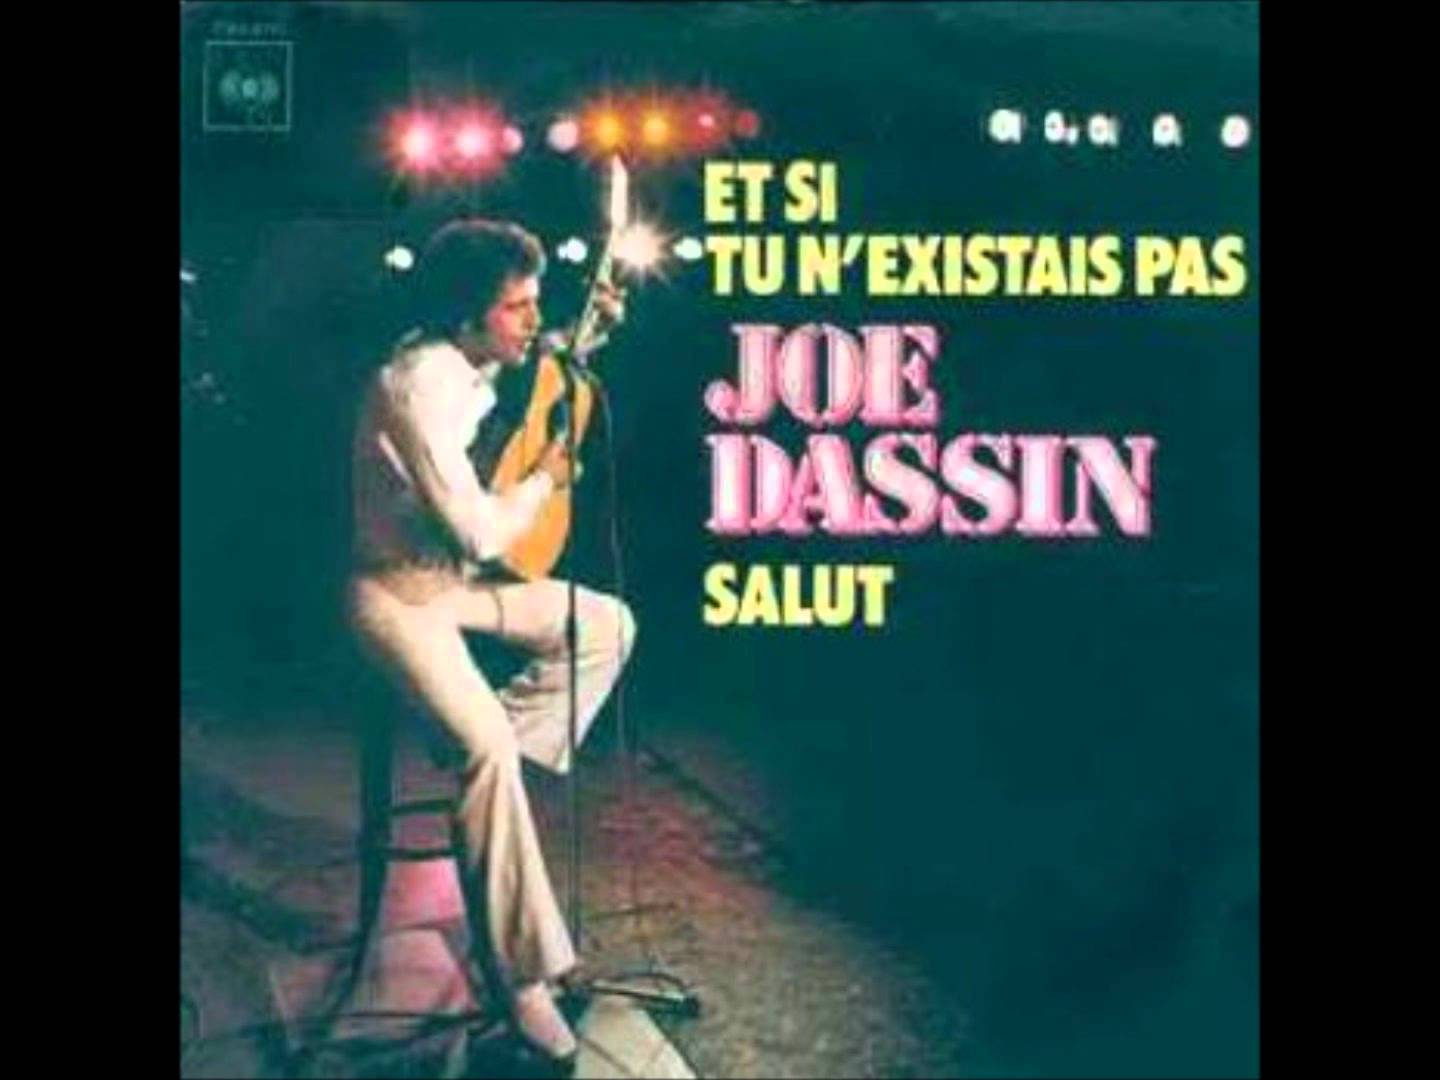 Joe Dassin - Et si tu n'existais pas (Самая красивая песня о любви)